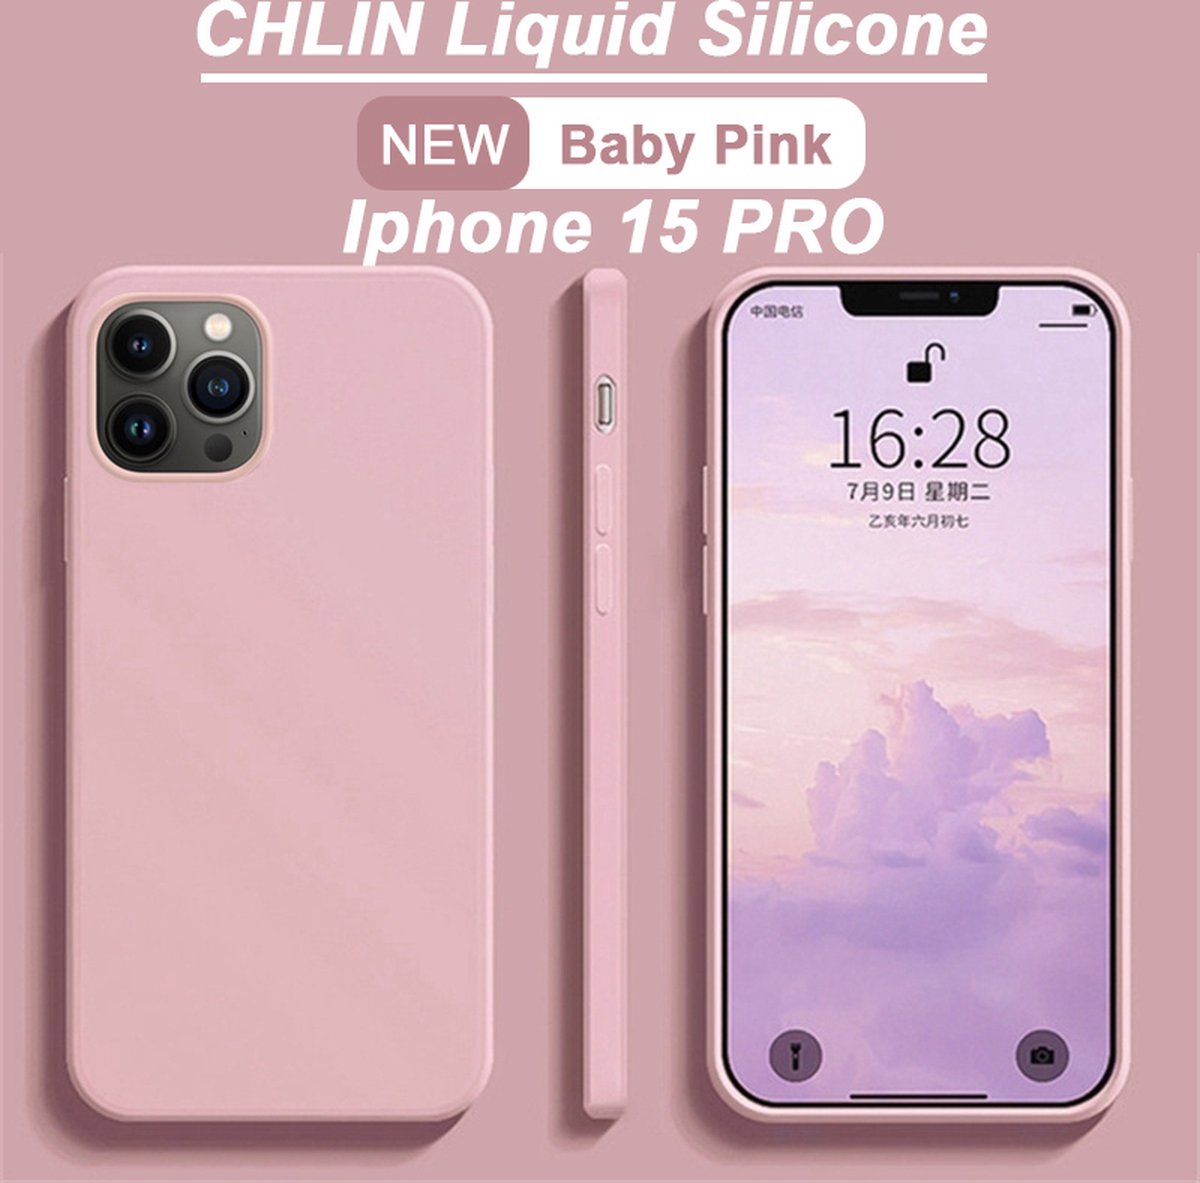 CL CHLIN® Premium Siliconen Case iPhone 15 Pro Roze - iPhone 15 Pro hoesje - iPhone 15 Pro case - iPhone 15 Pro hoes - Silicone hoesje - iPhone 15 Pro protection - iPhone 15 Pro protector.